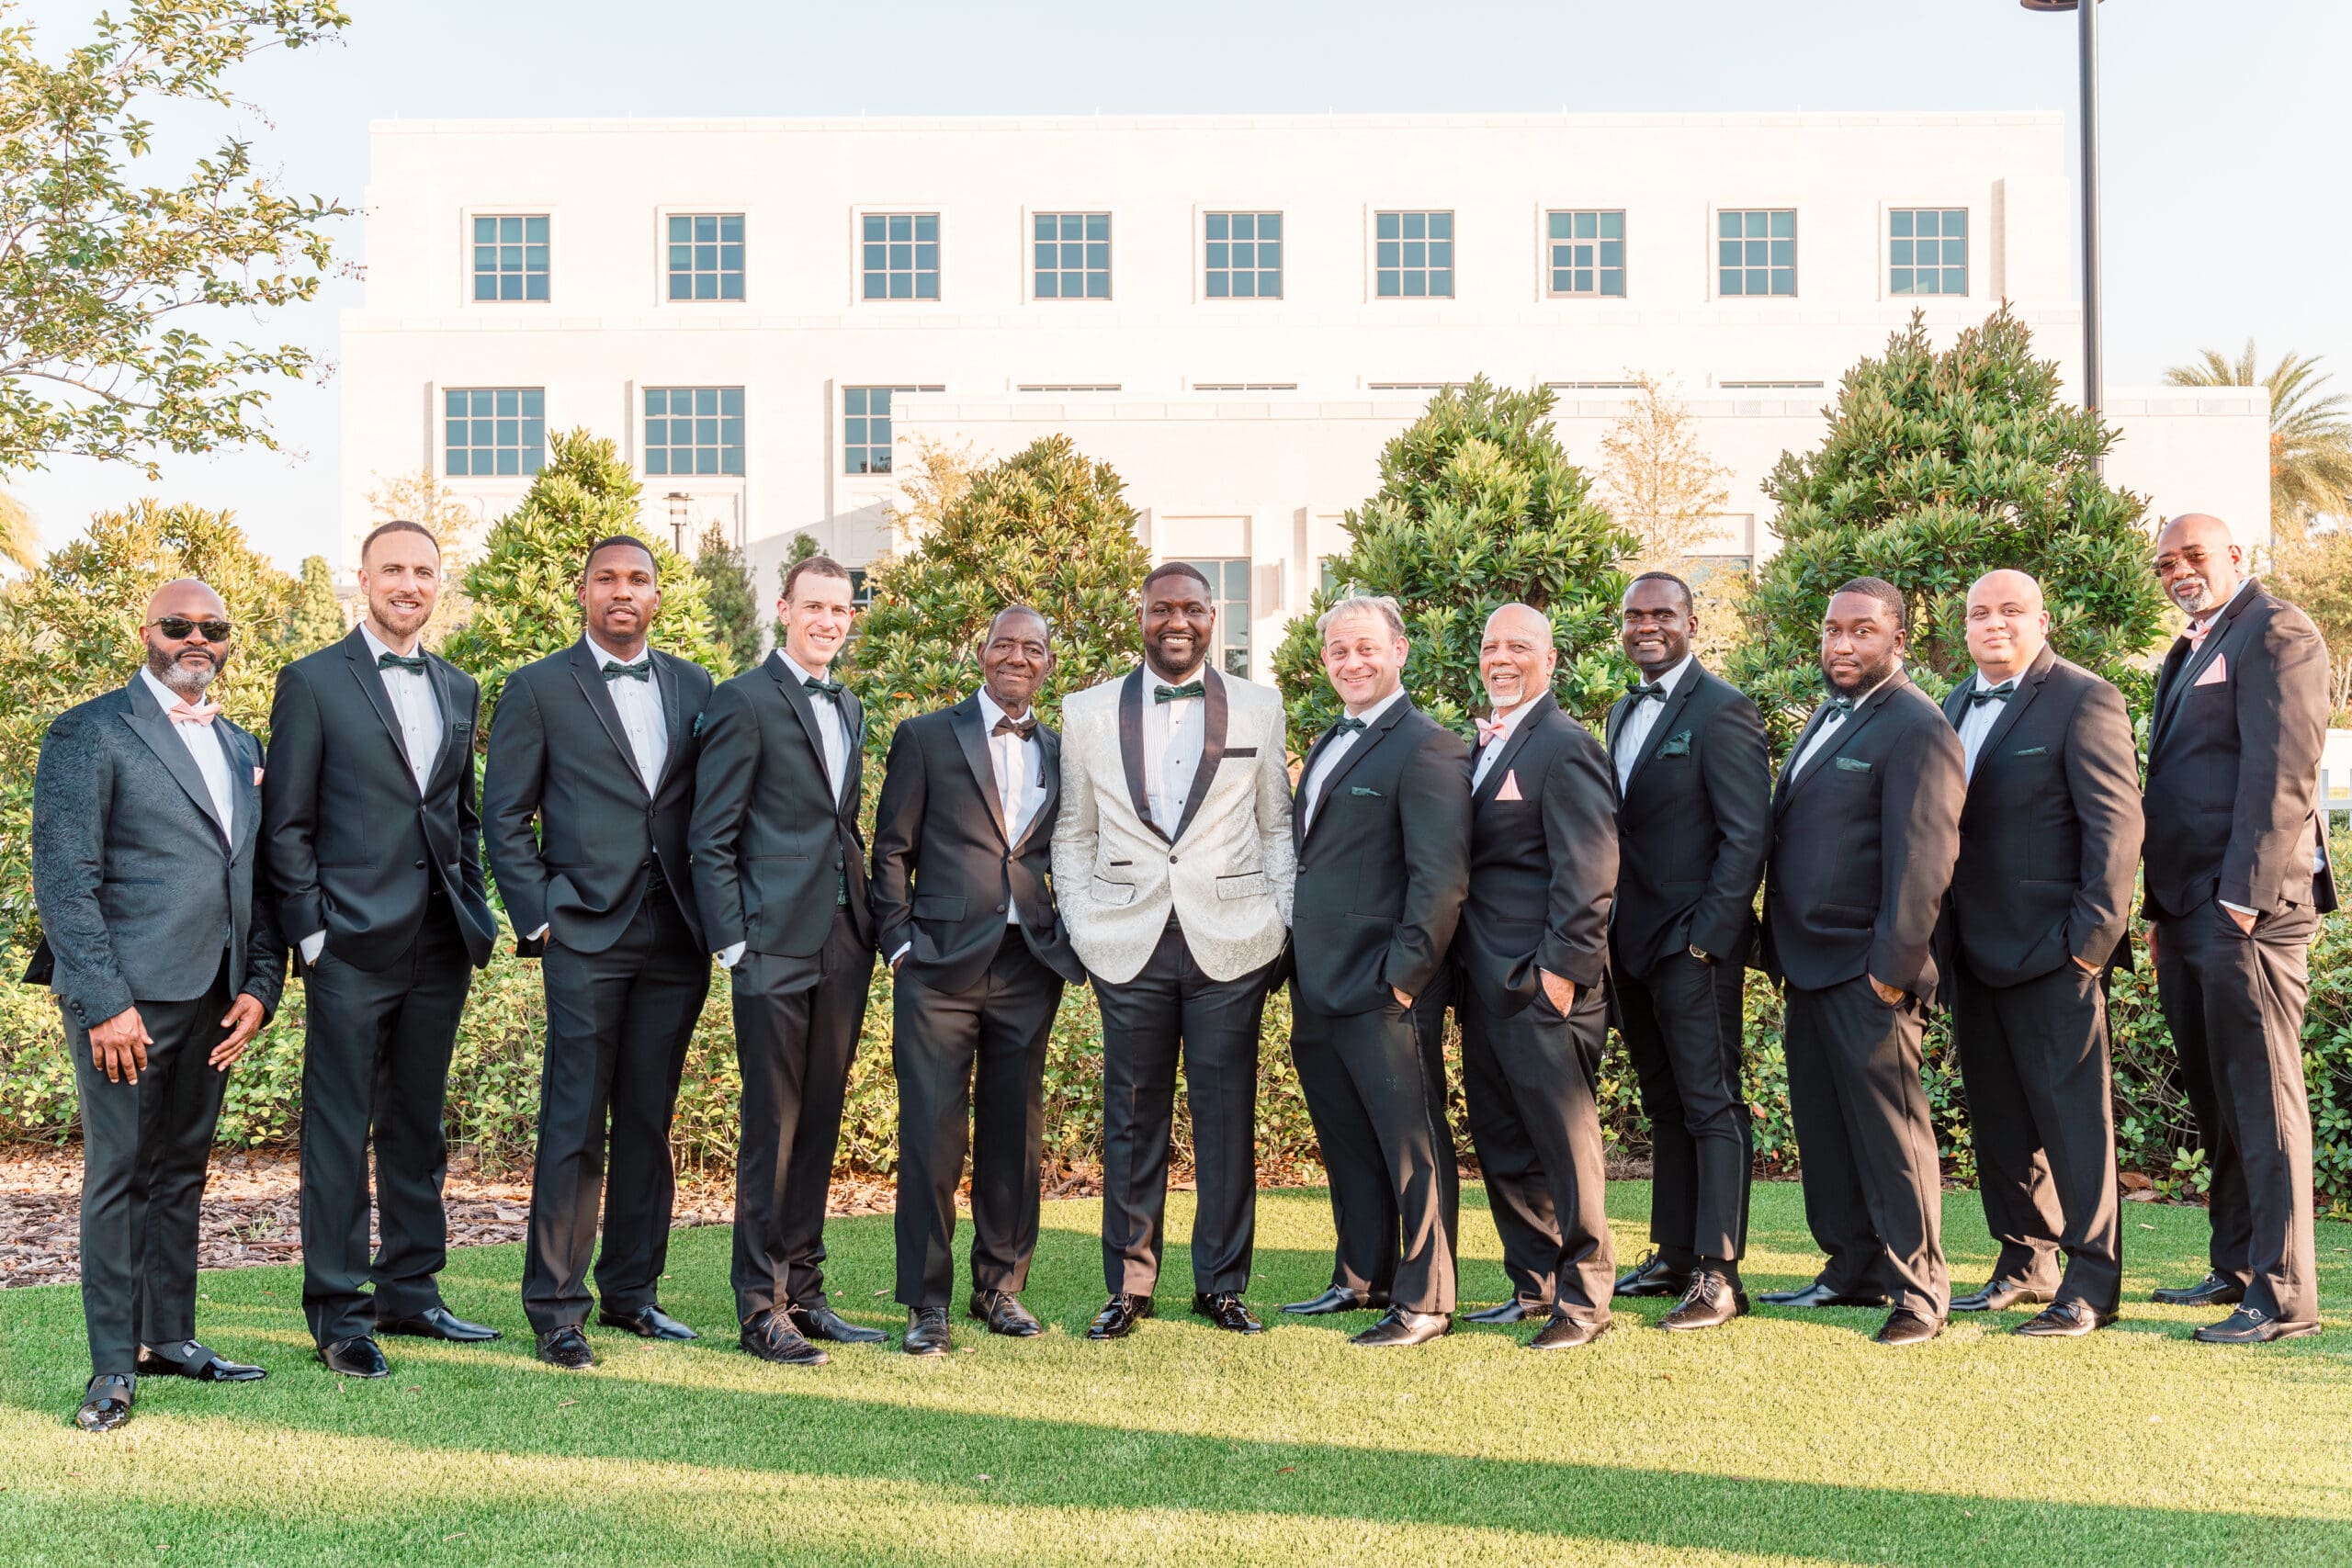 Glen posing with his 11 groomsmen in front of the Ocoee Lakeshore Center.